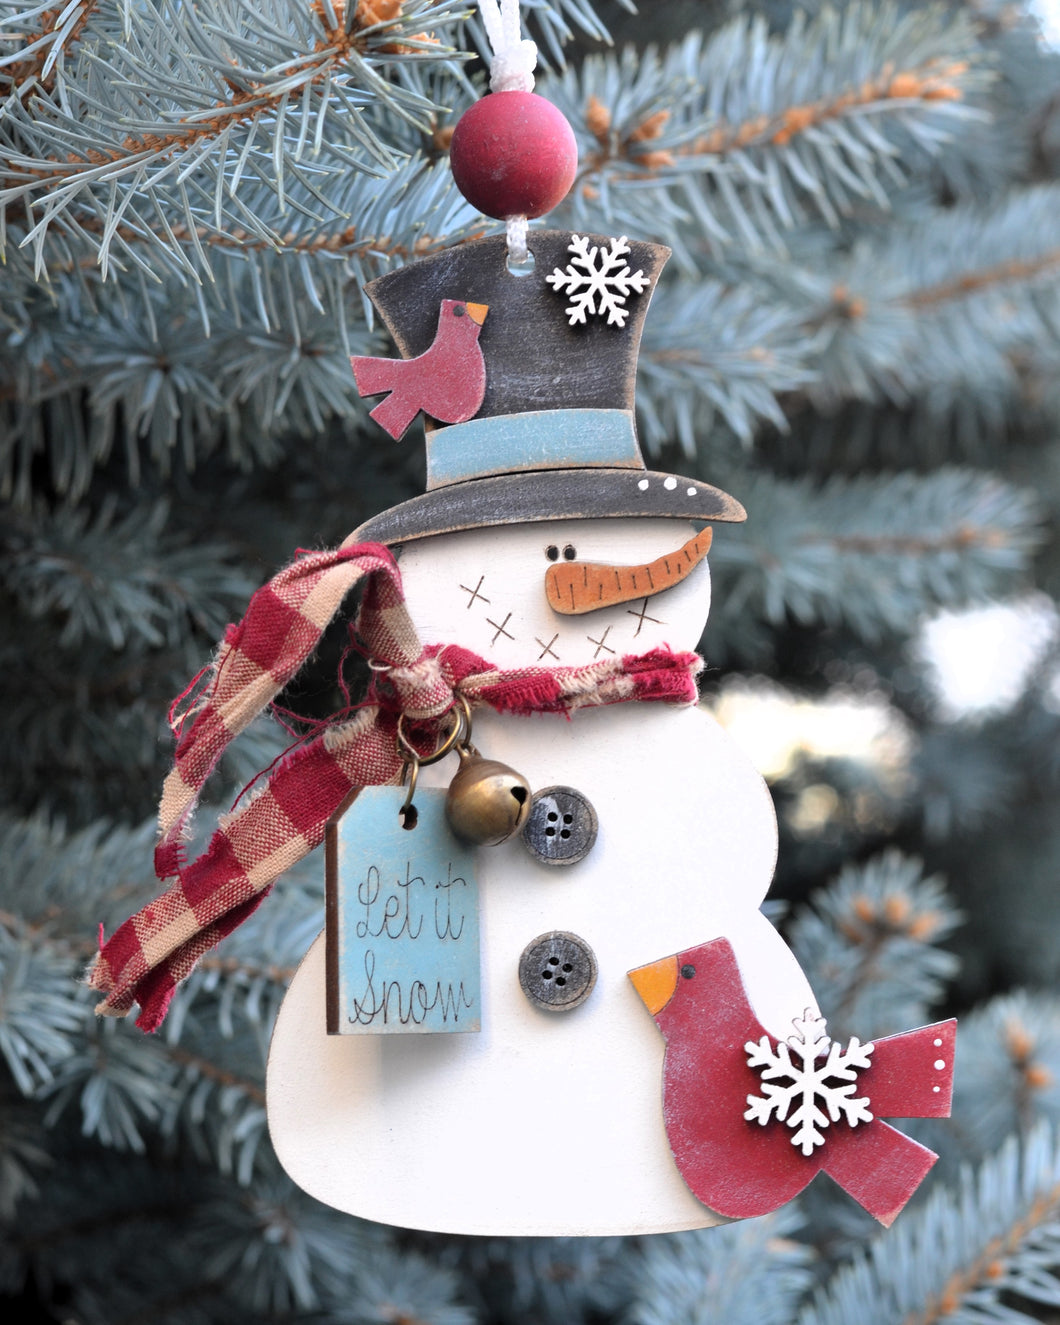 Wooden Snowman Ornament